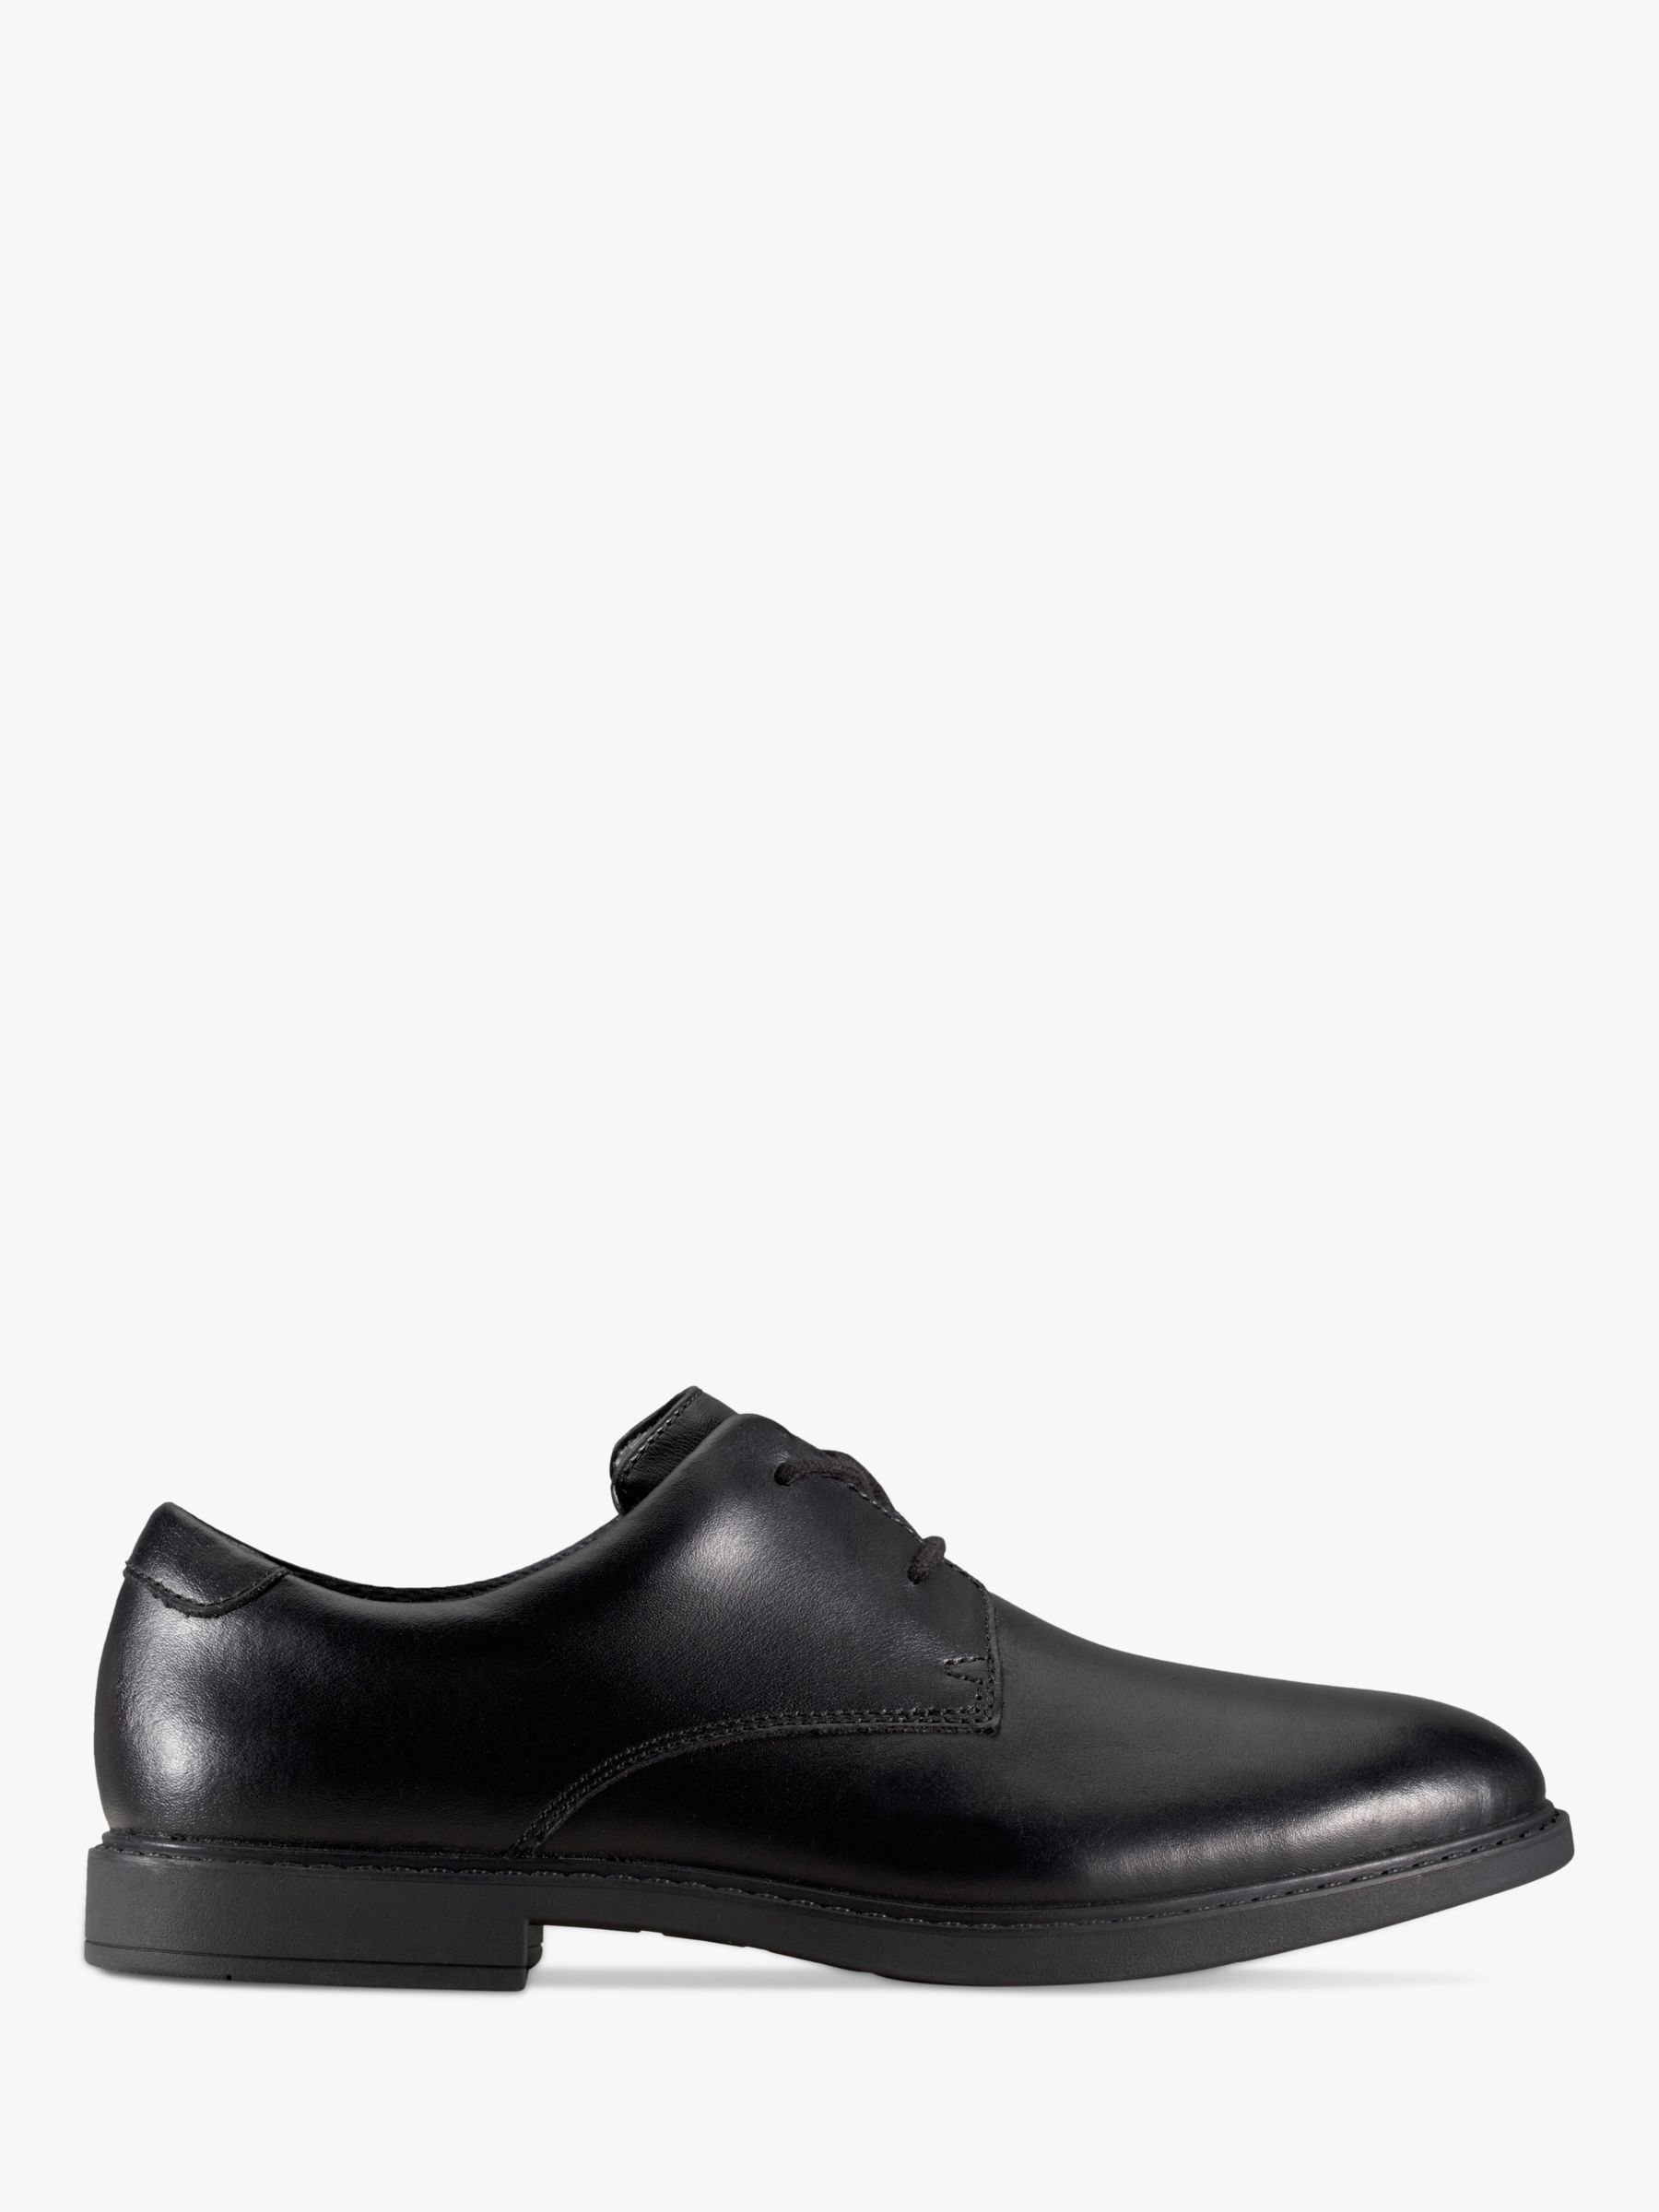 Childrens Kids Boys Leather Slip On Smart Formal School Shoes (Color: Black, Size: UK 3) by Absolute Footwear